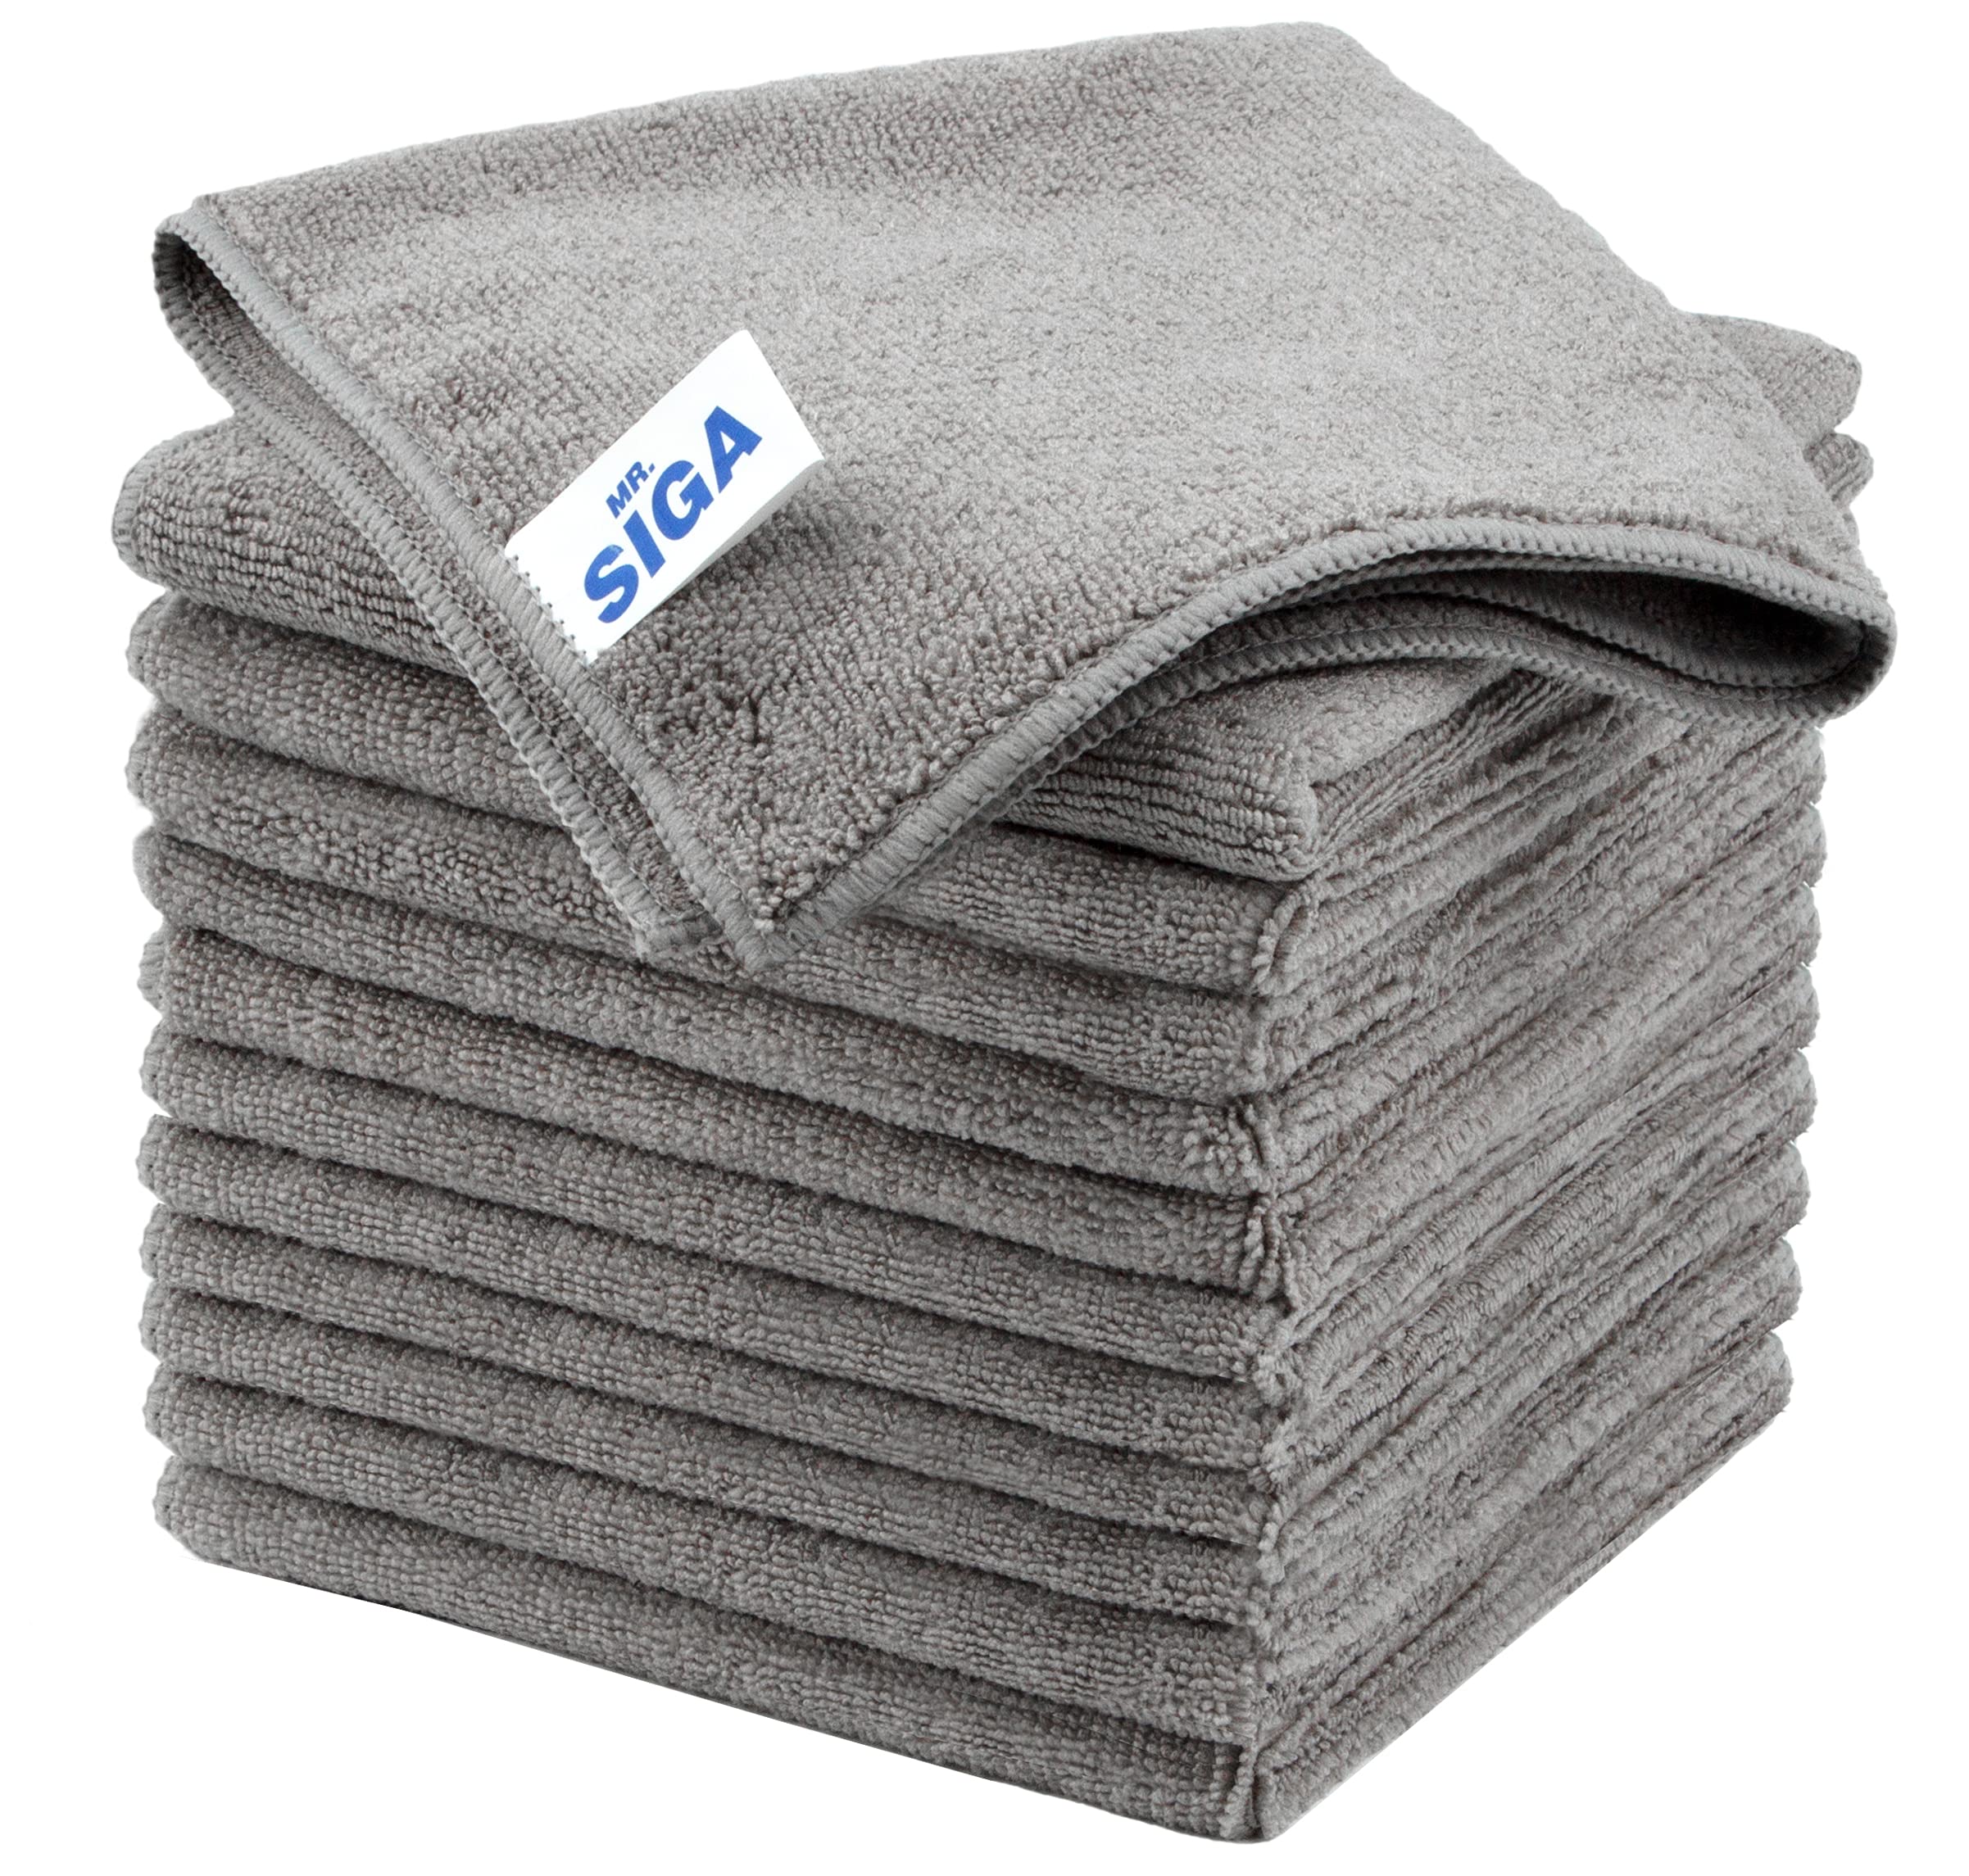 MR.SIGA Microfiber Cleaning Cloth, All-Purpose Microfiber Towels